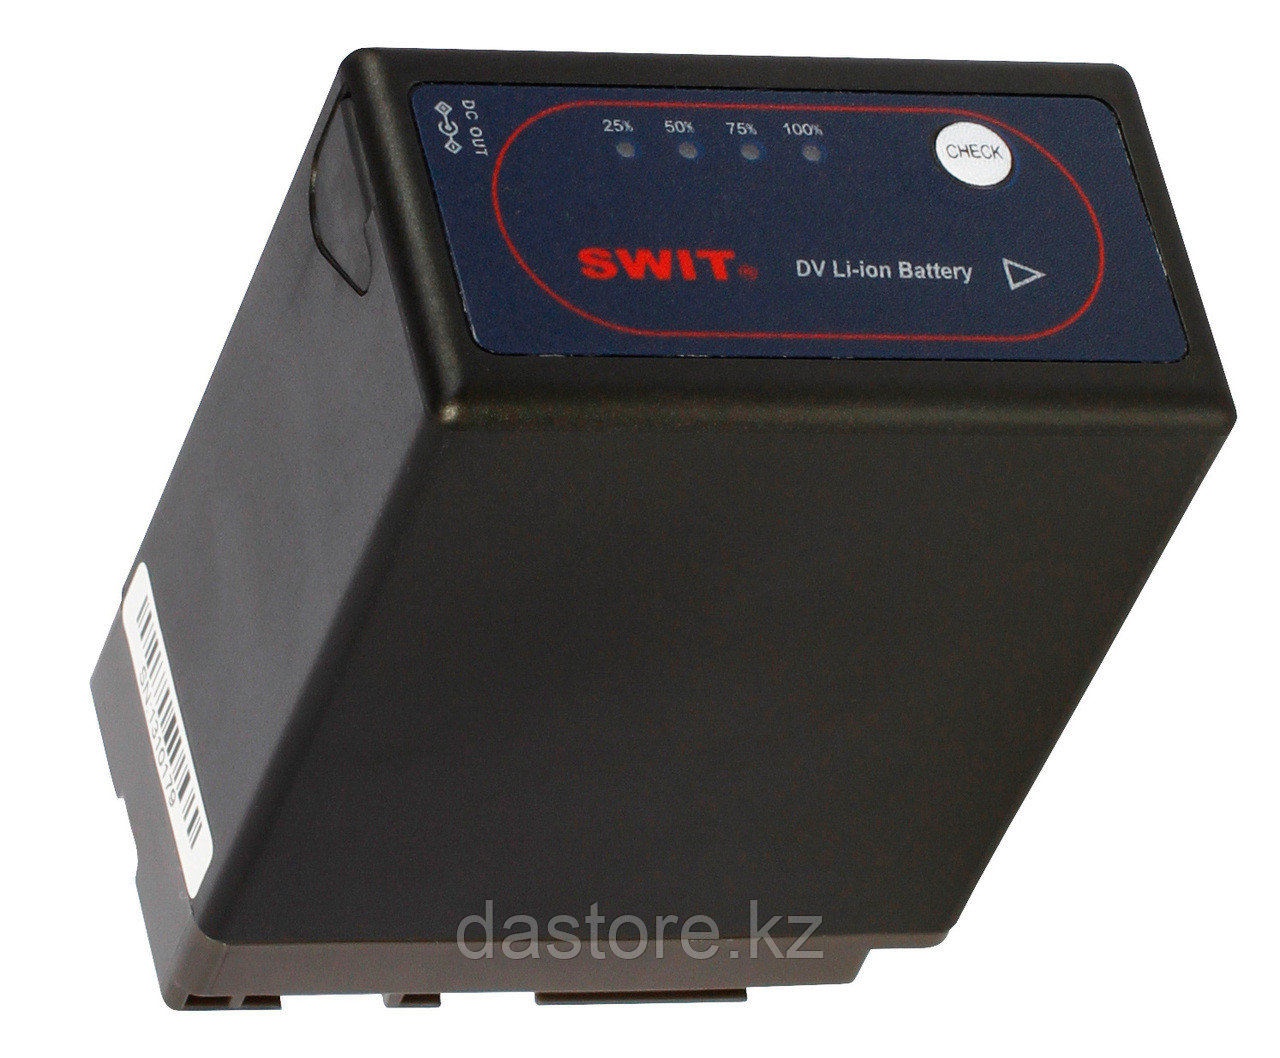 SWIT S-8BG6 аккумулятор для камер Panasonic, аналог Panasonic VW-VBG6.